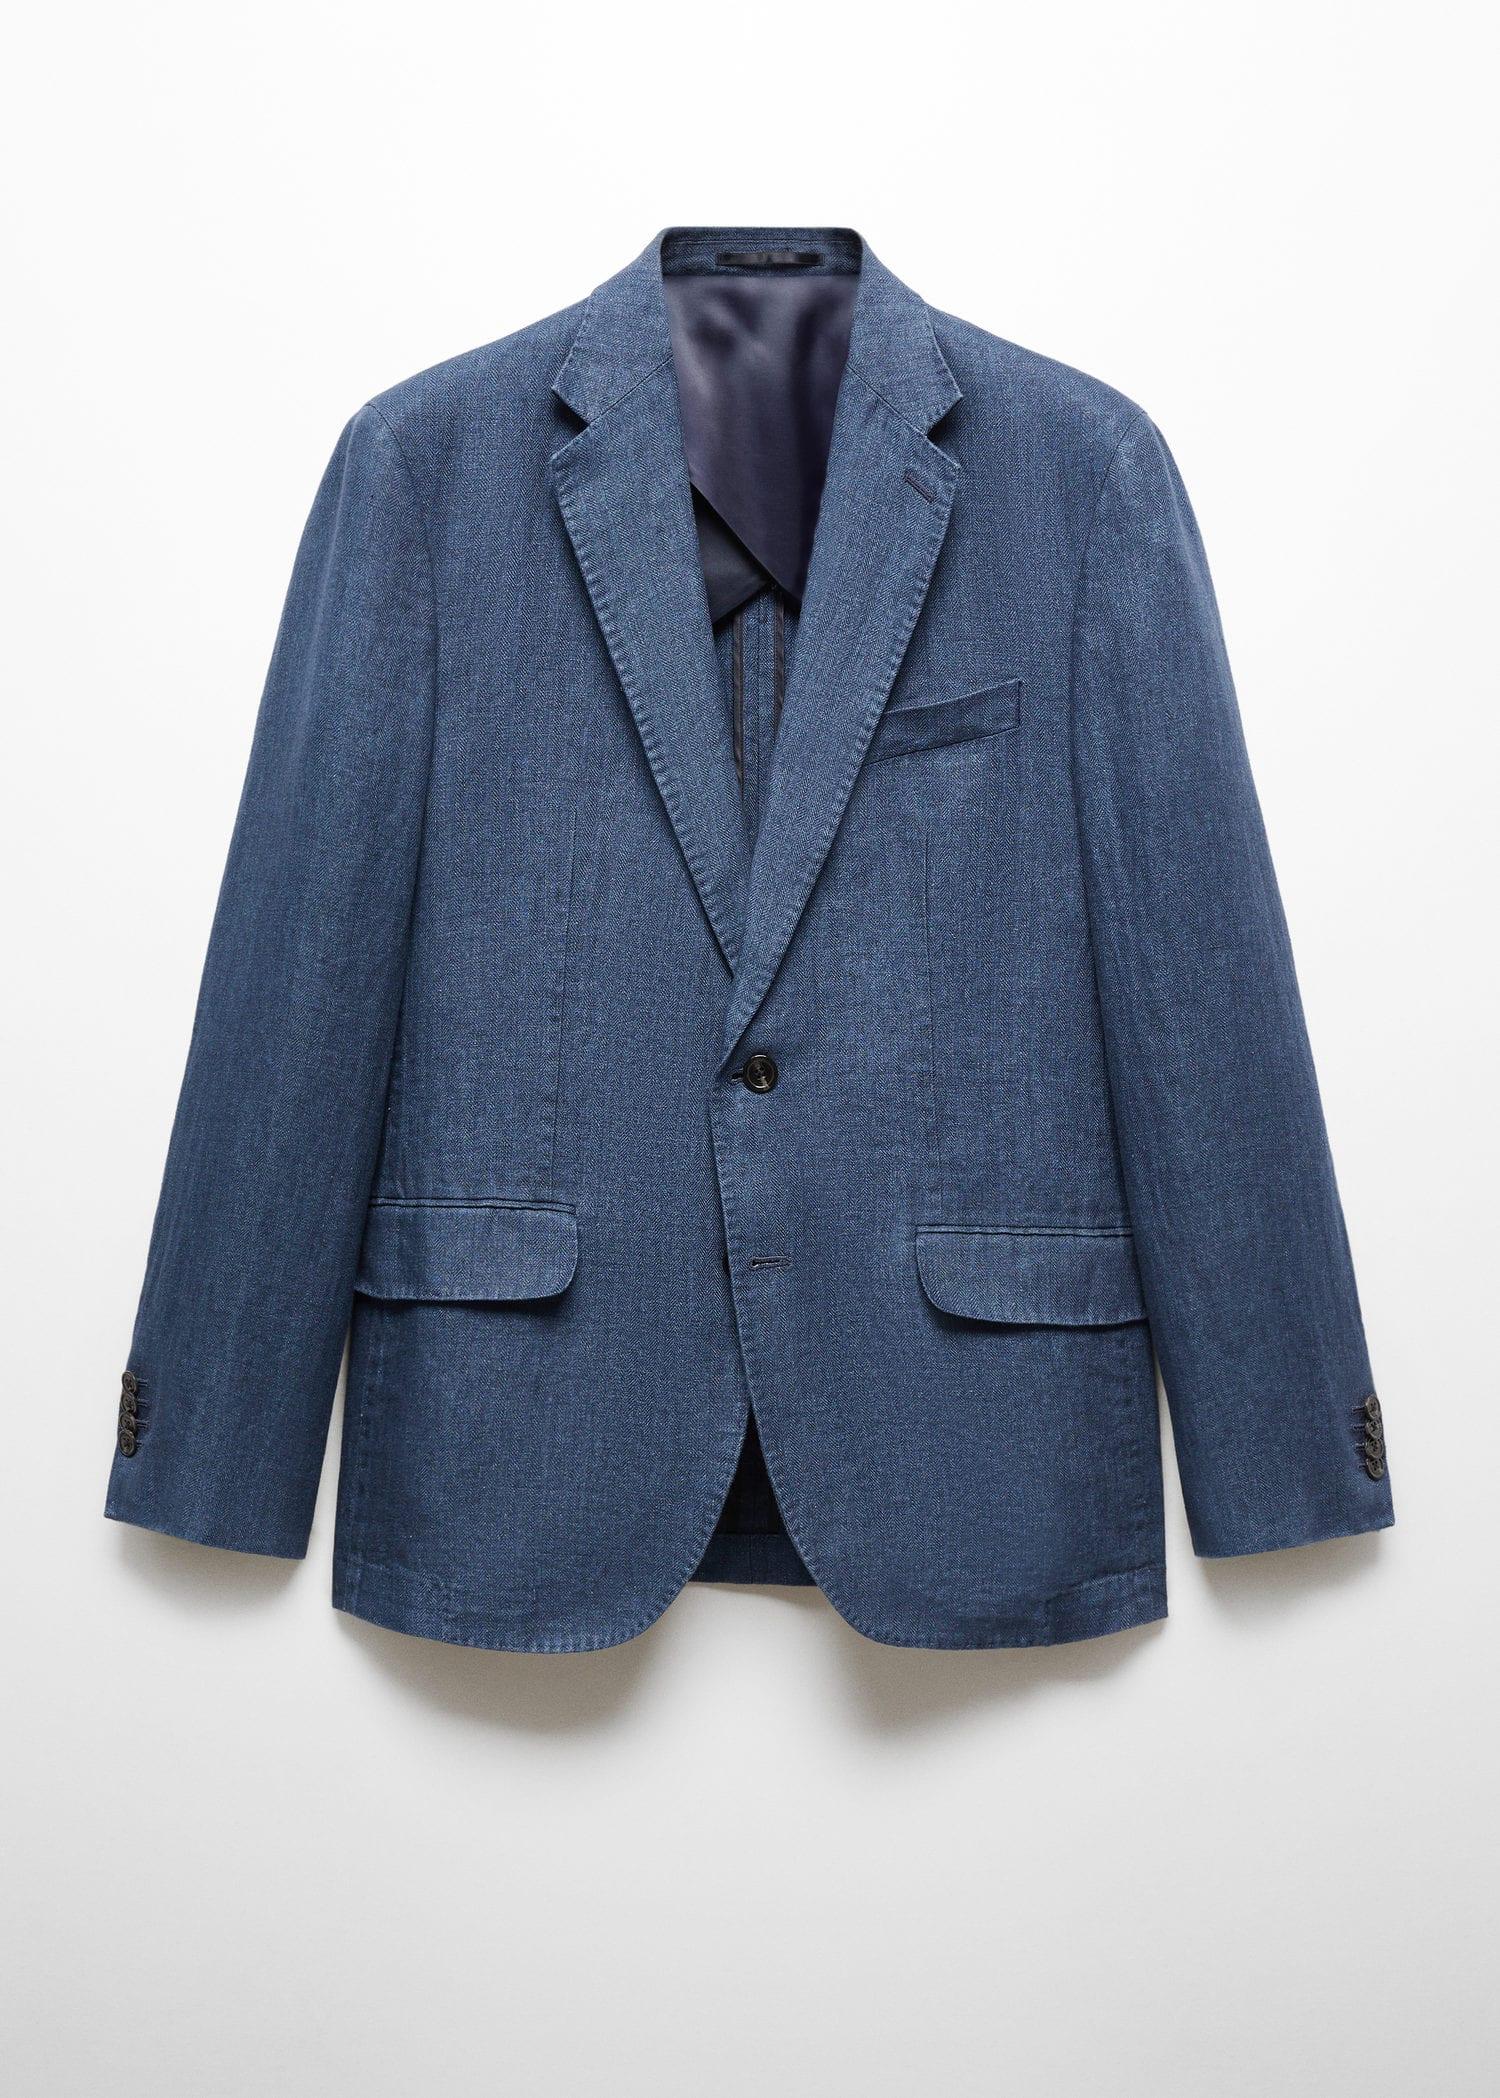 slim fit suit jacket in 100% herringbone linen